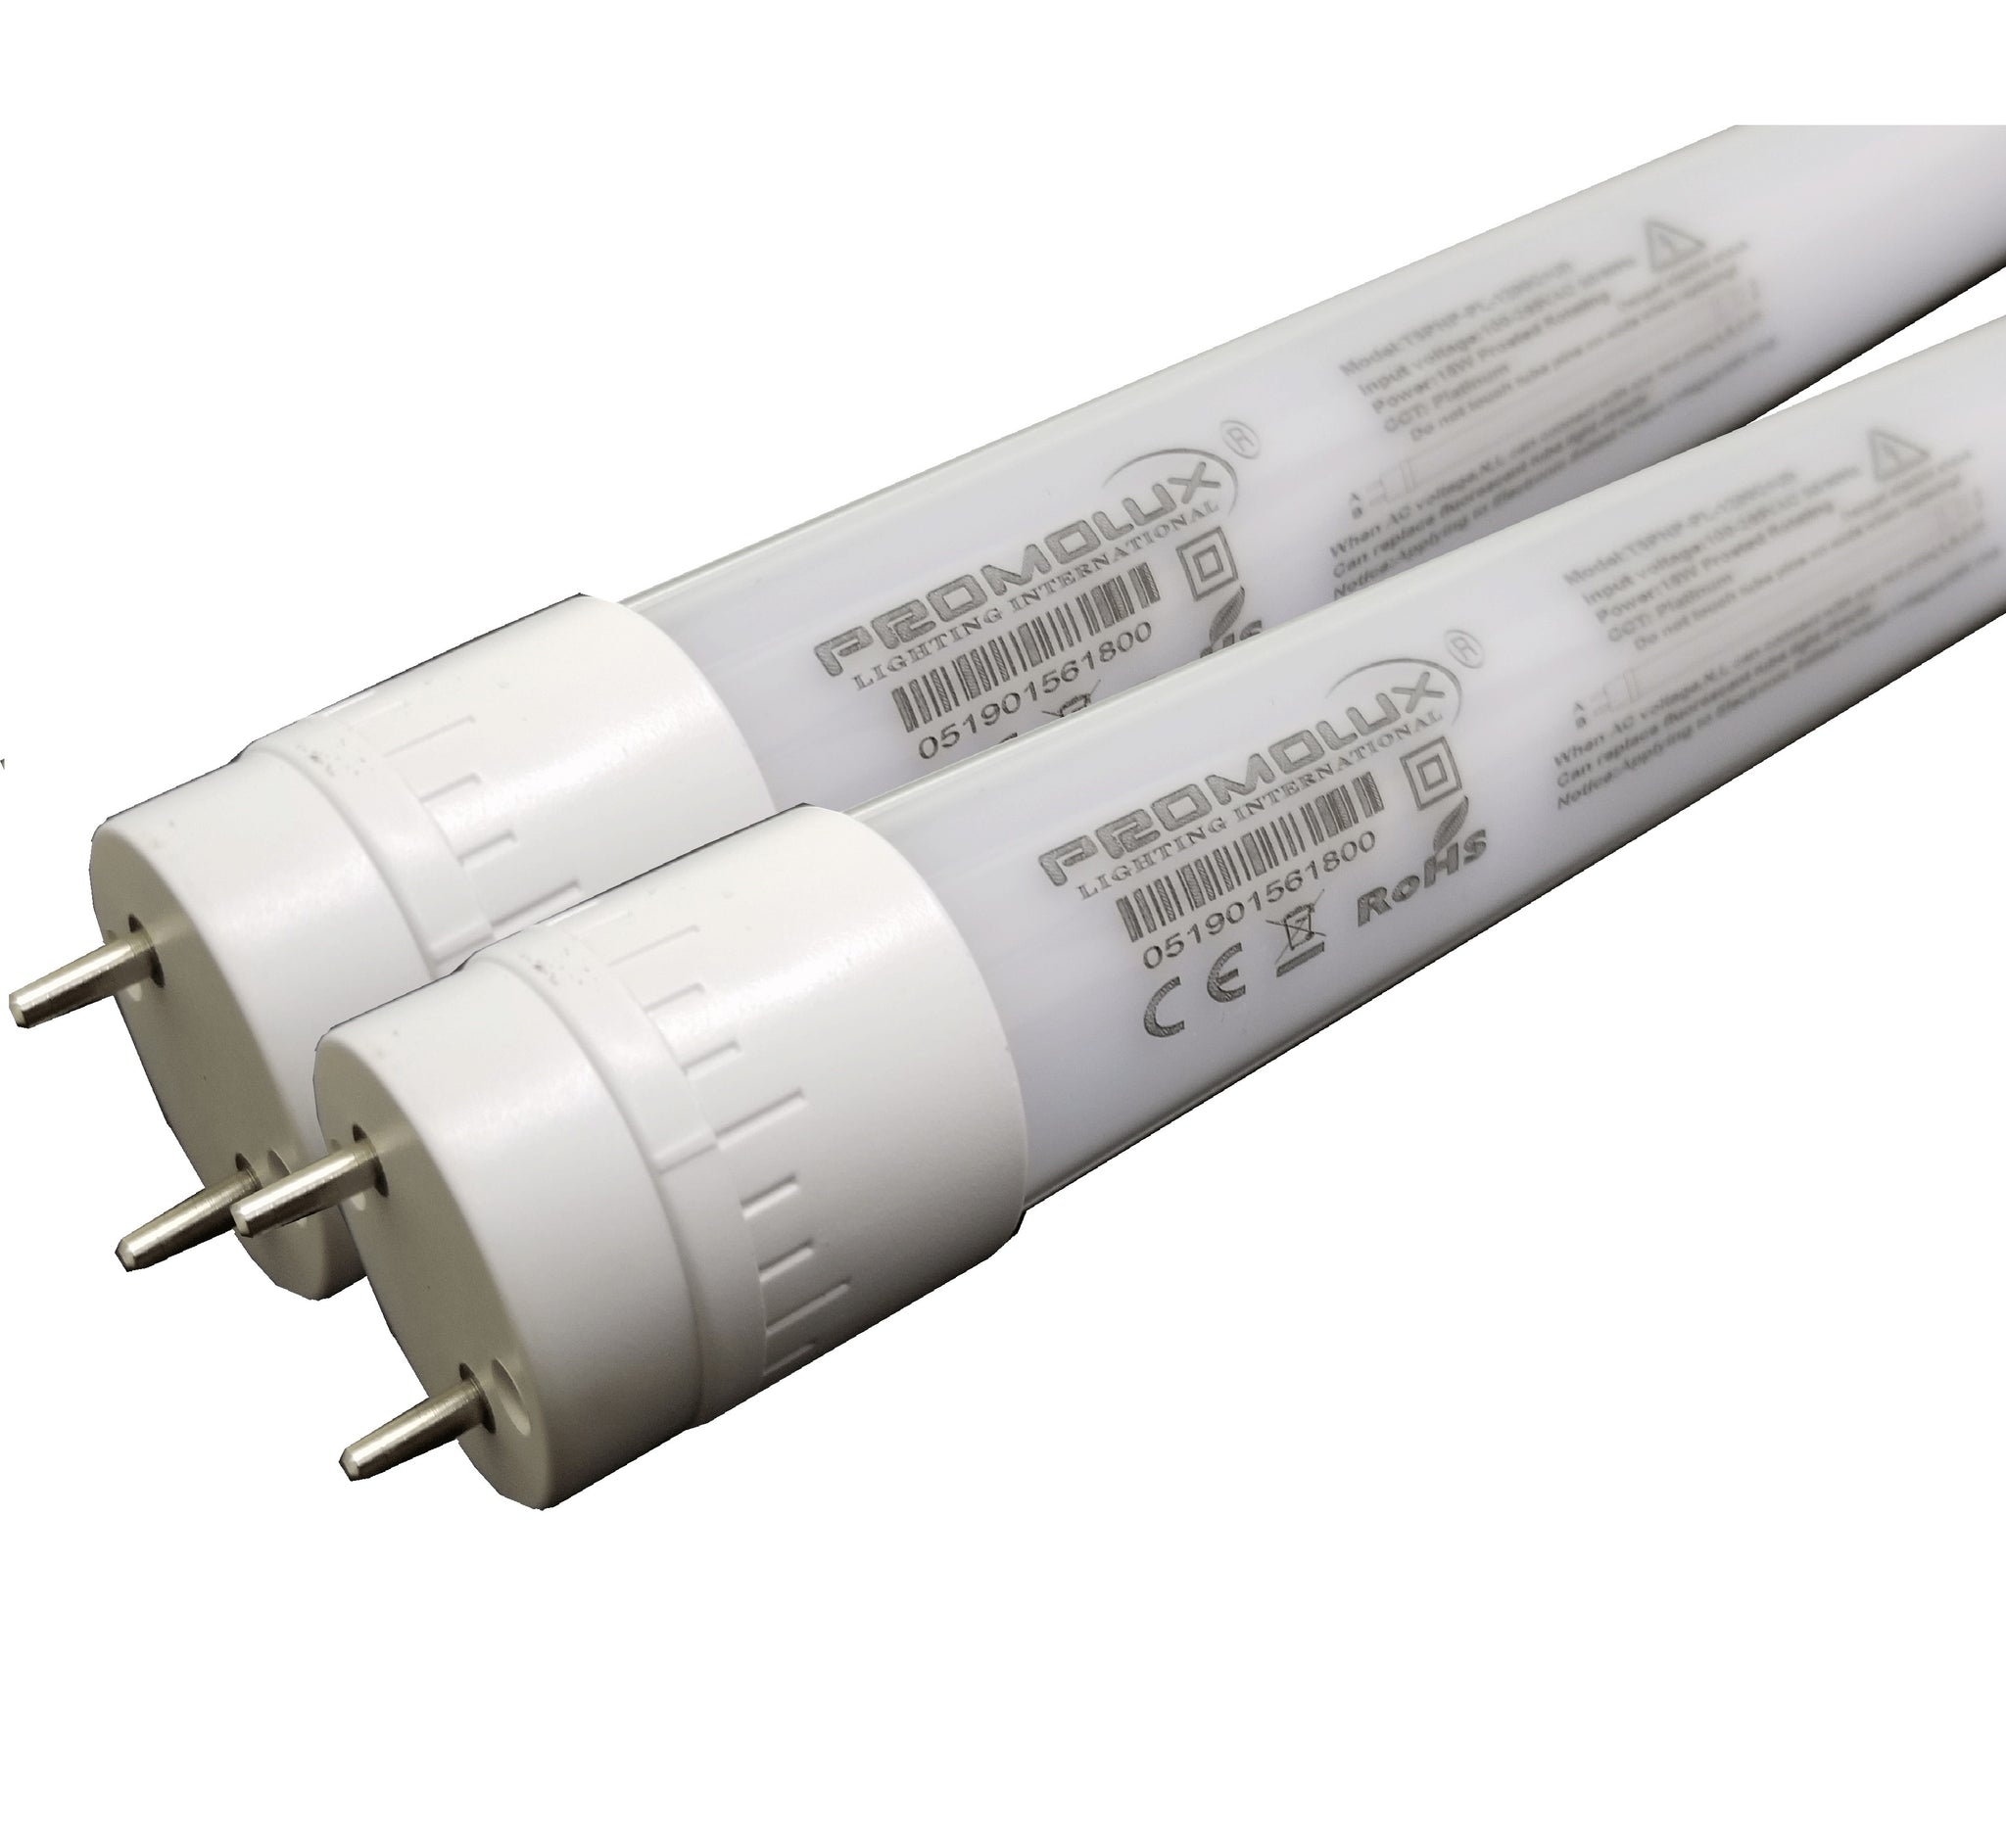 Promolux LED Tube T8 Plug-n-Play – Frontline Innovation + Safety